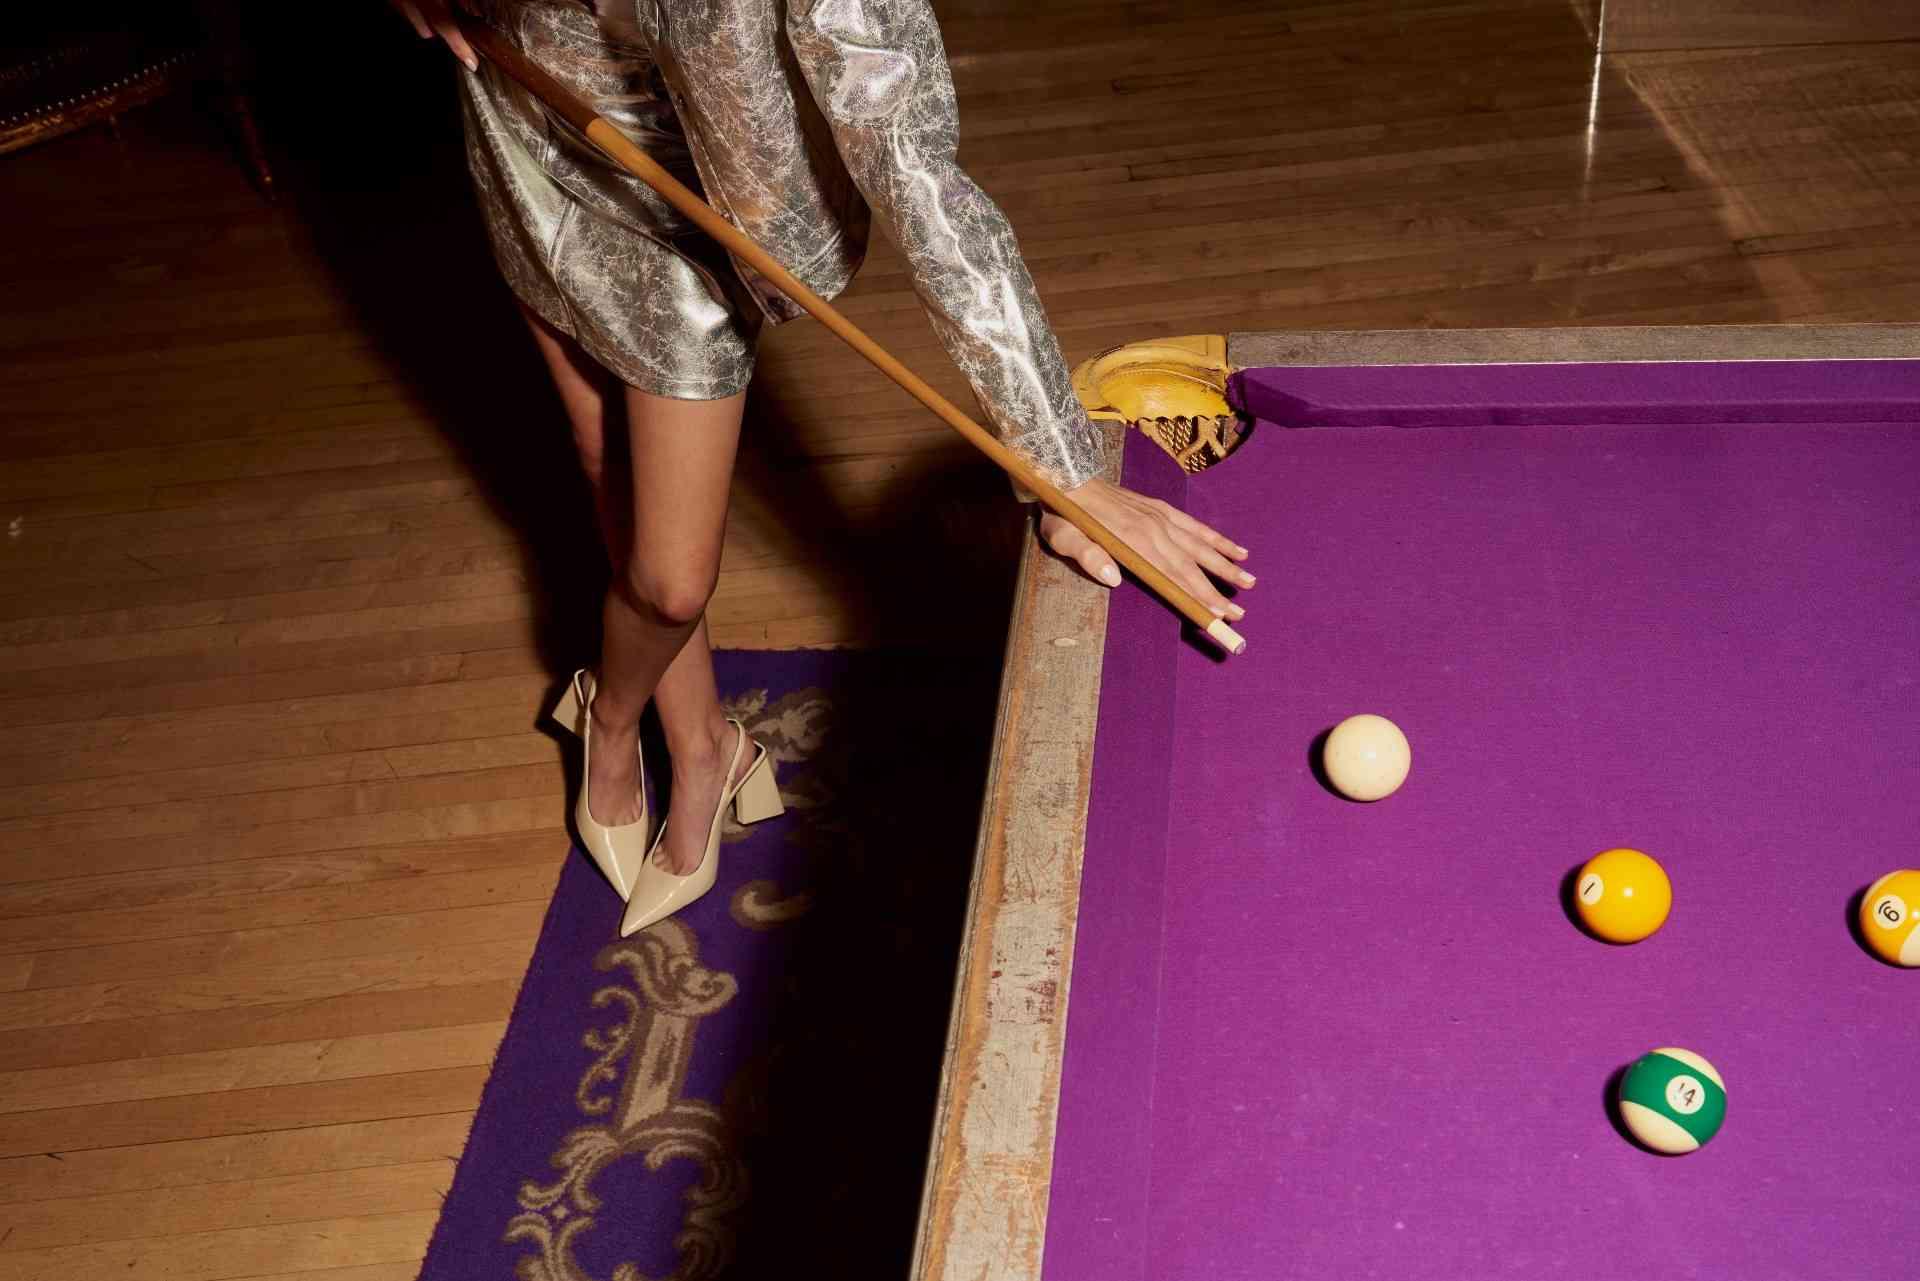 Woman plays pool